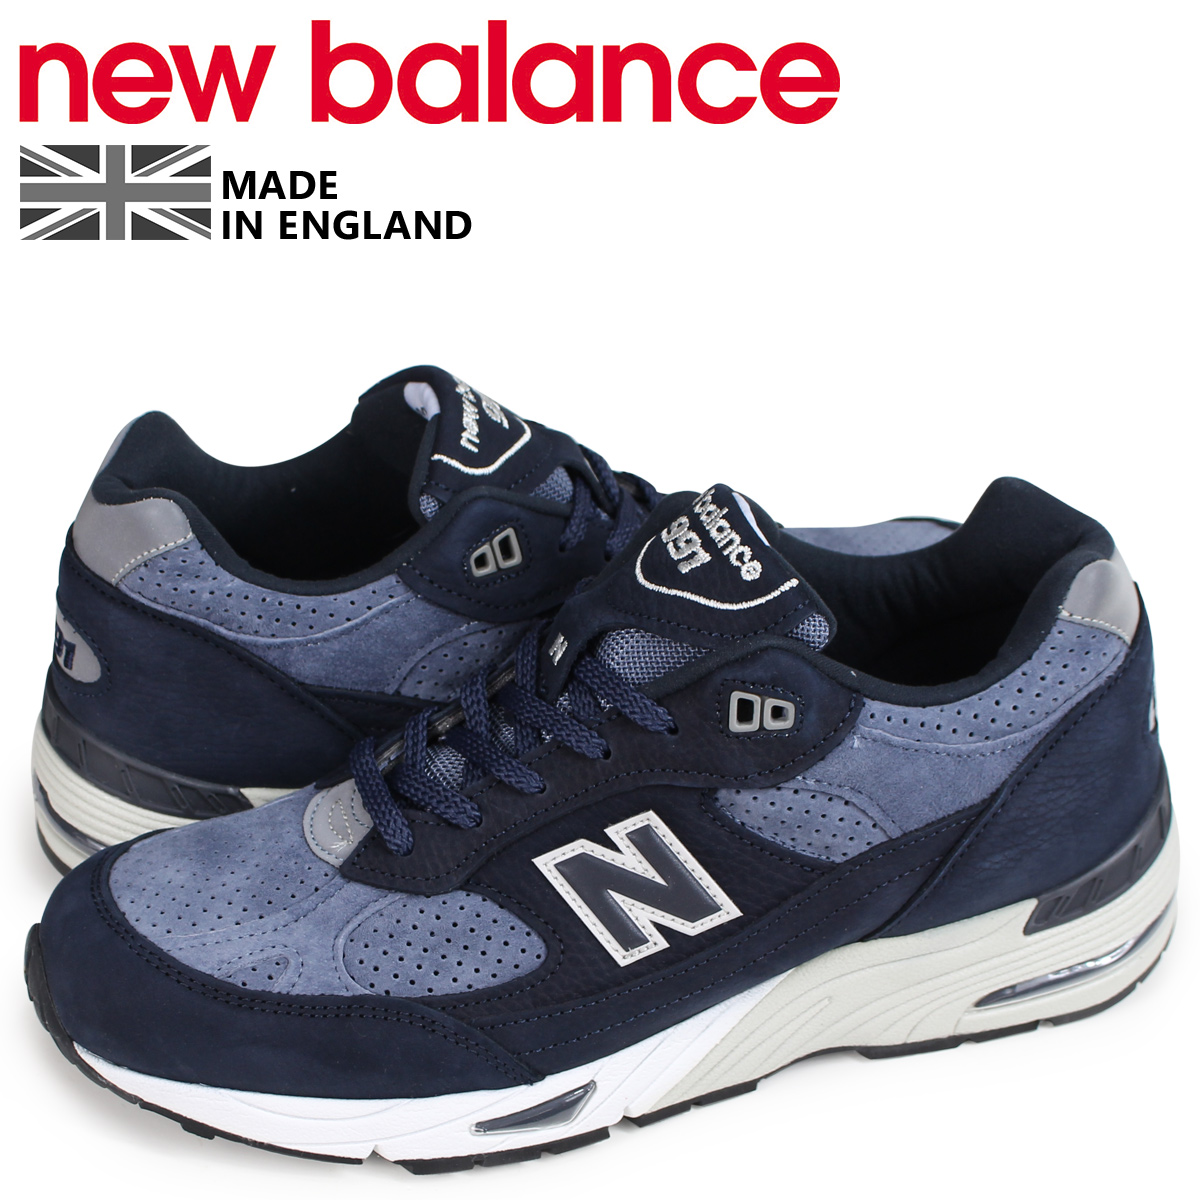 buy new balance uk